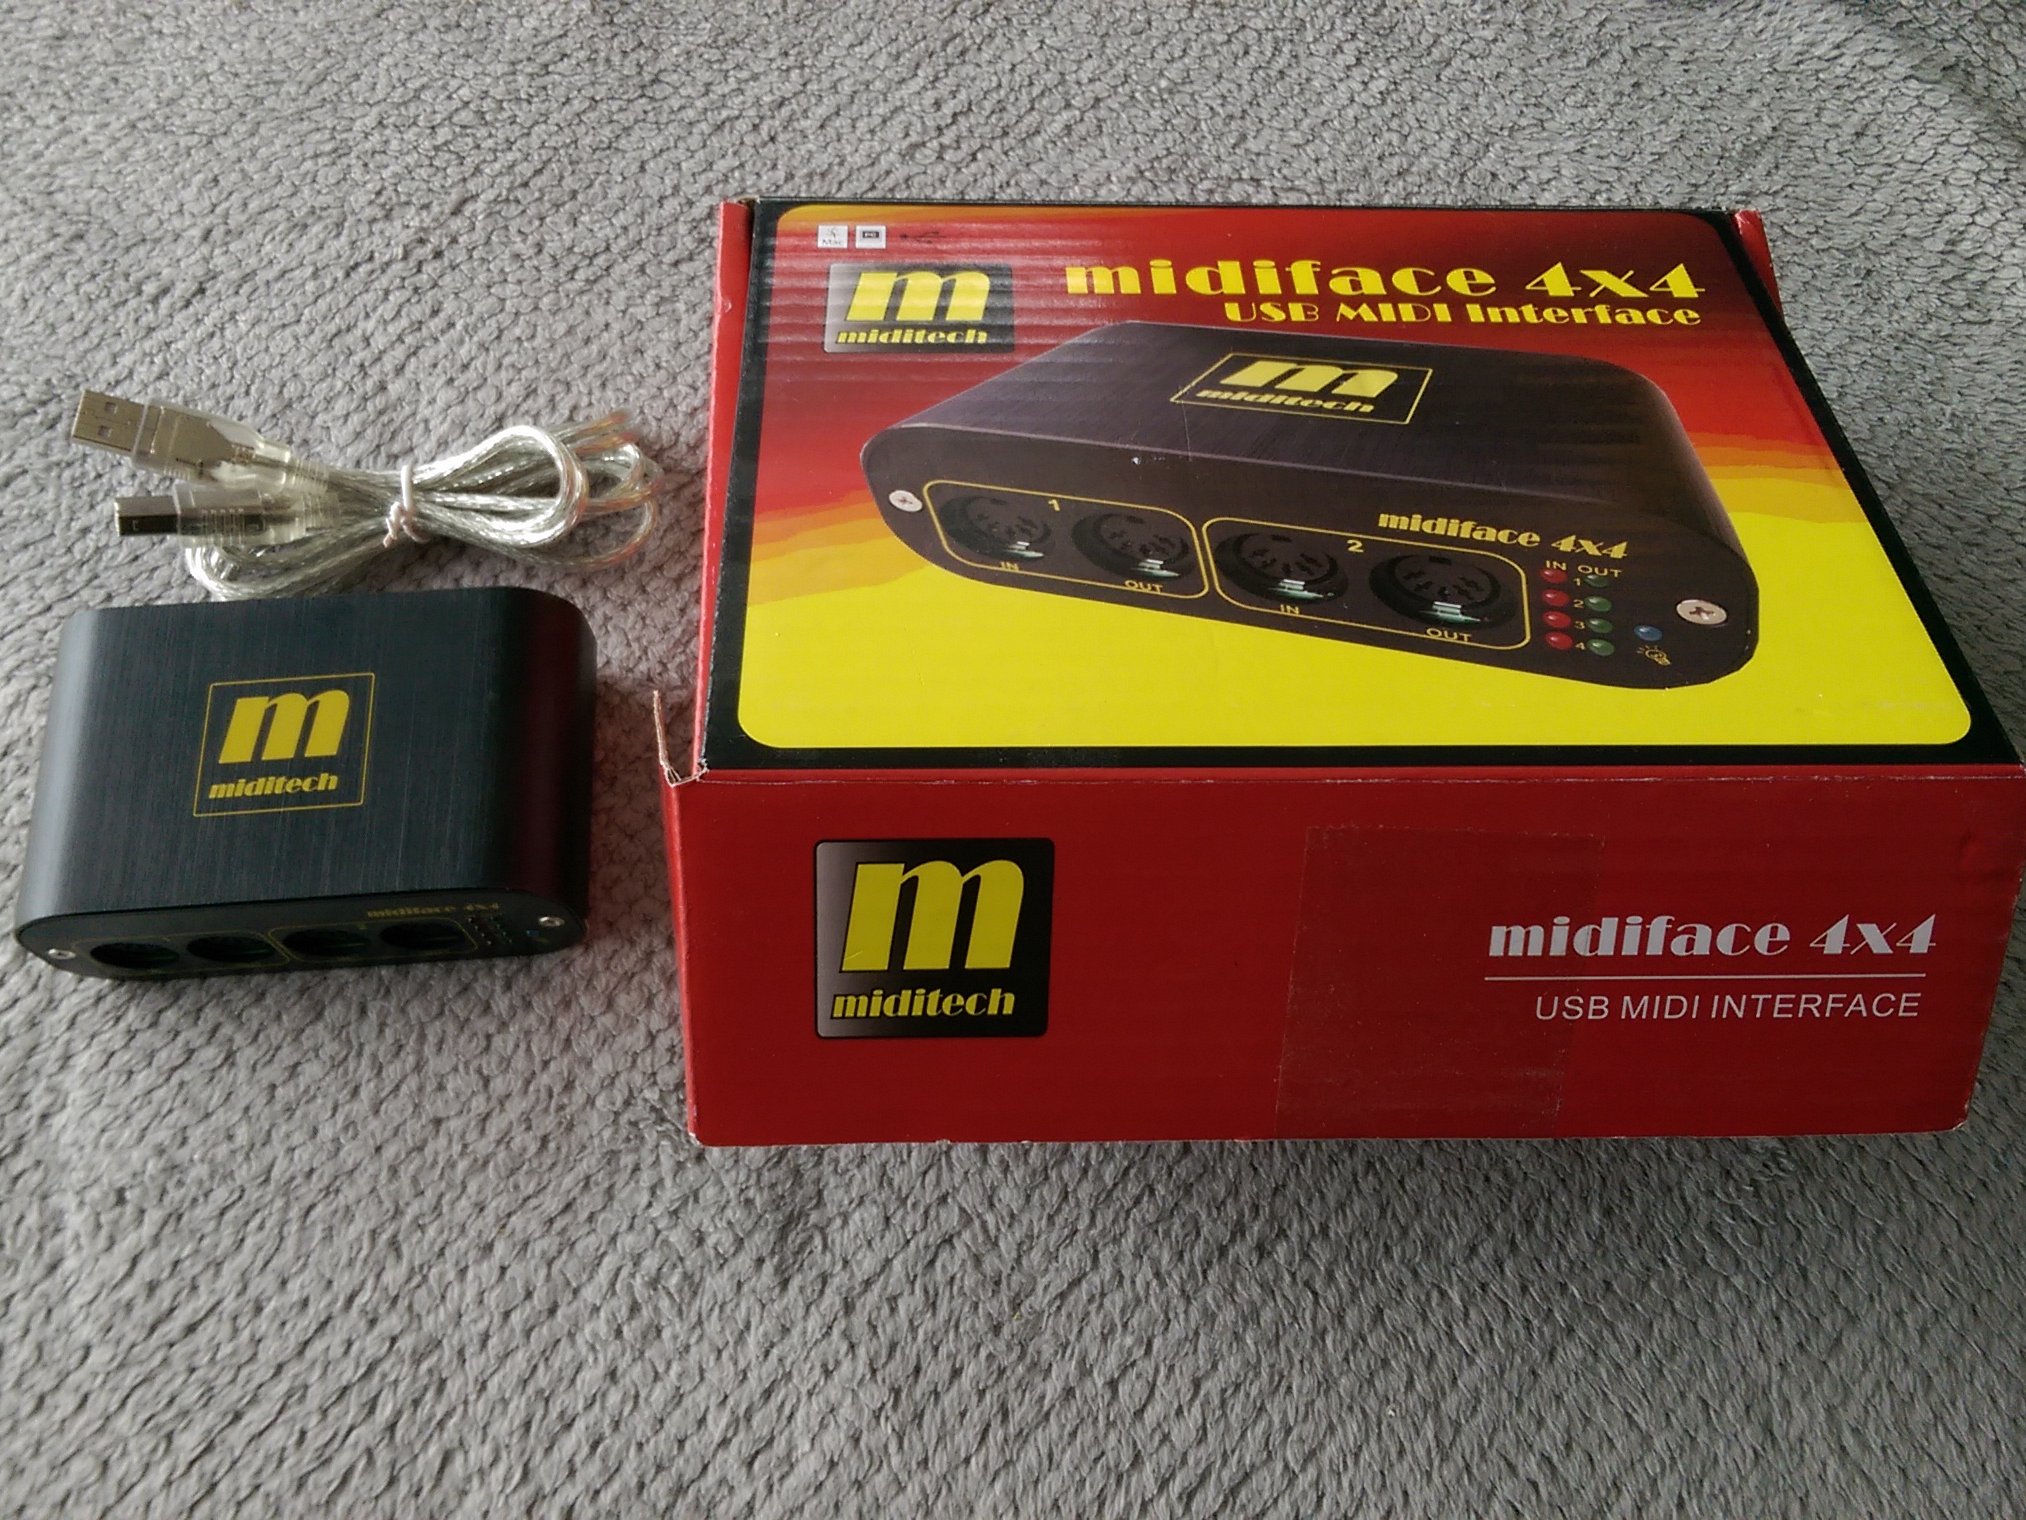 USB MIDI 4x4 from Miditech/MidiPlus Hacked - Hackster.io